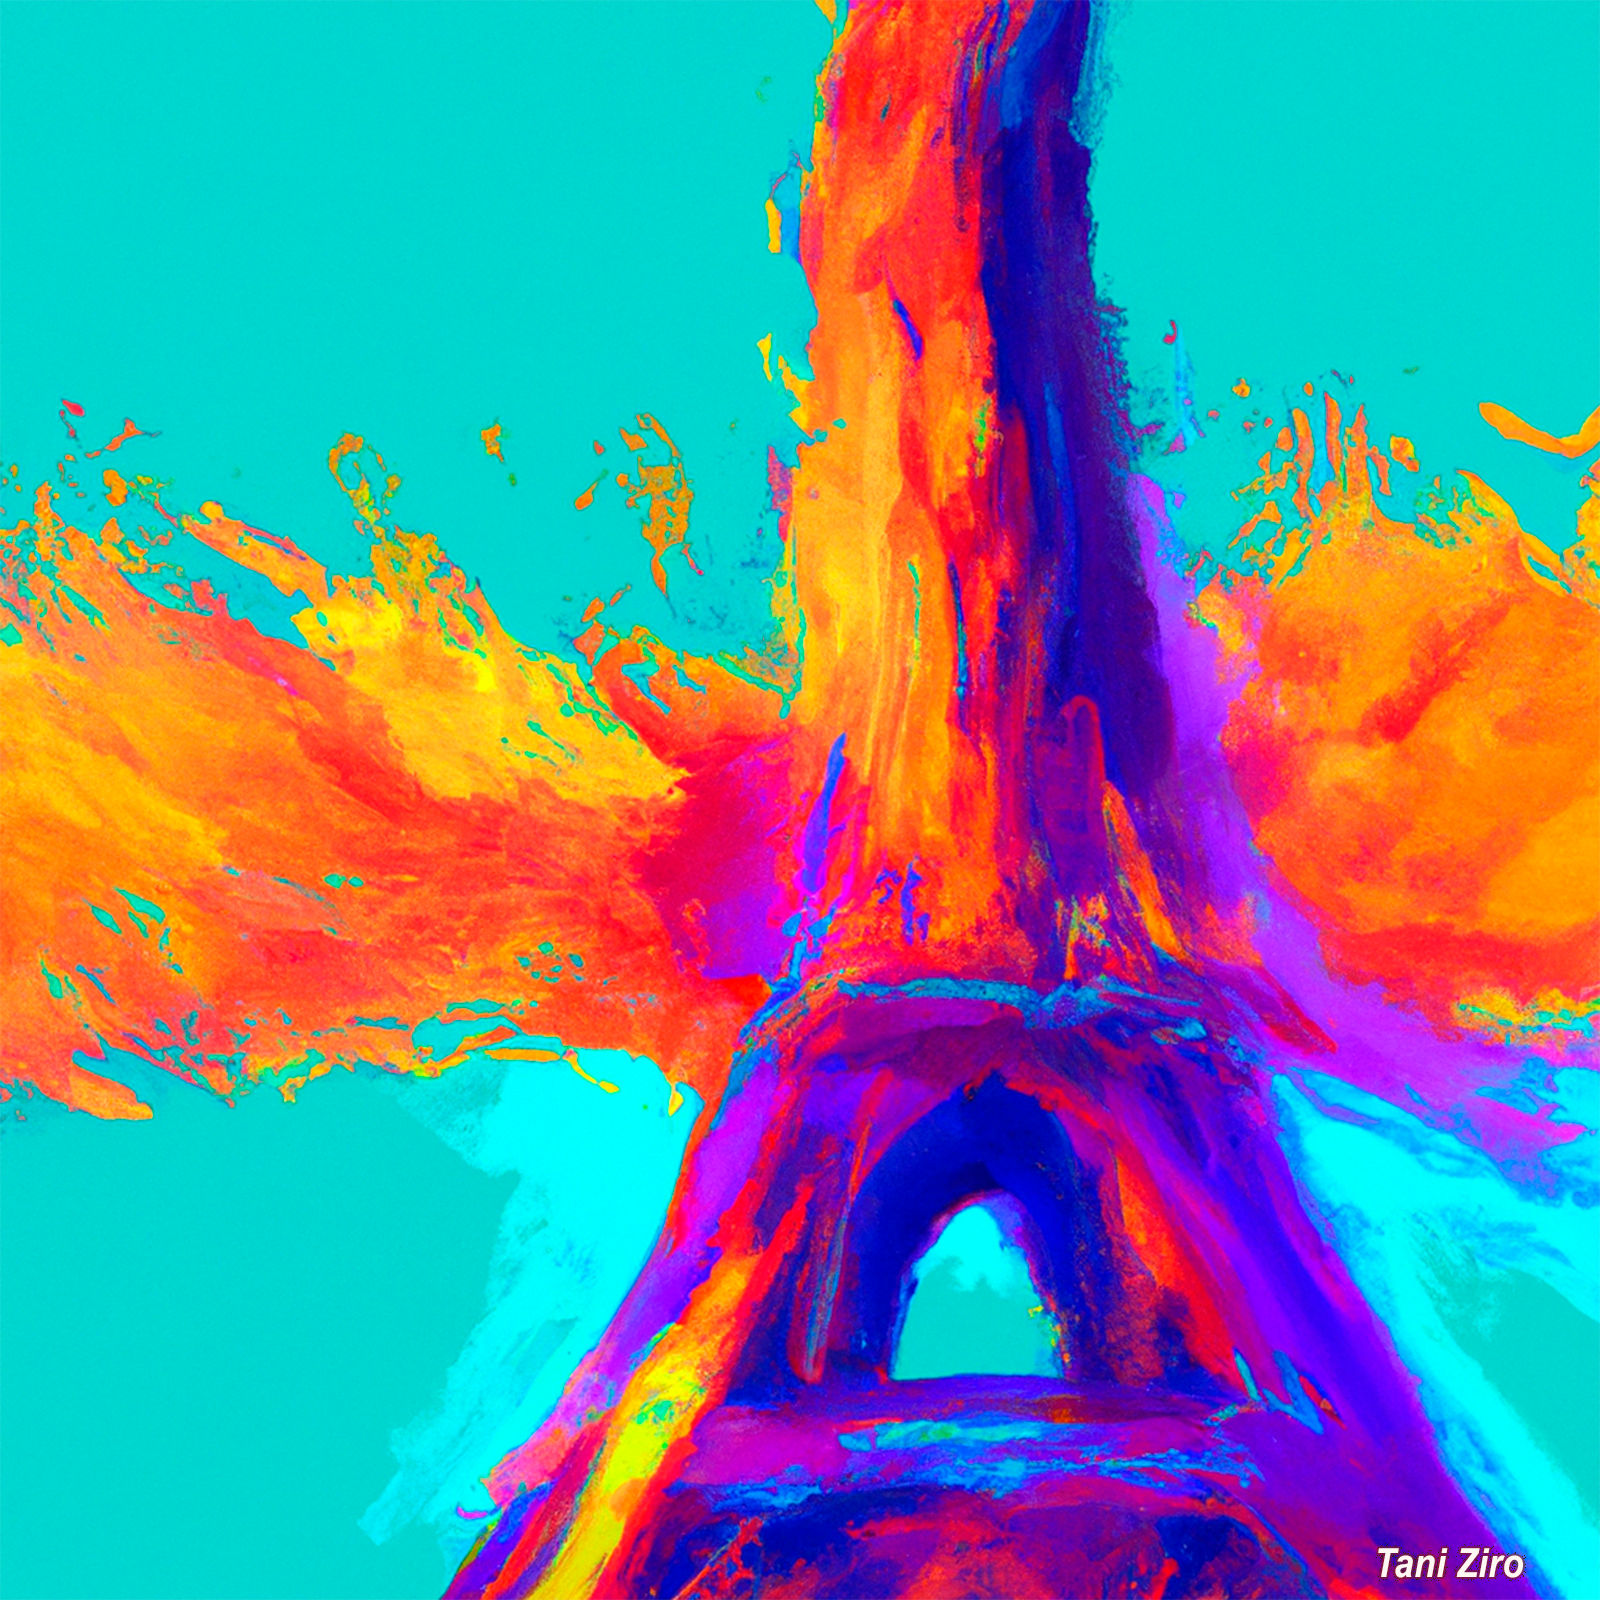 Eiffel abstract style